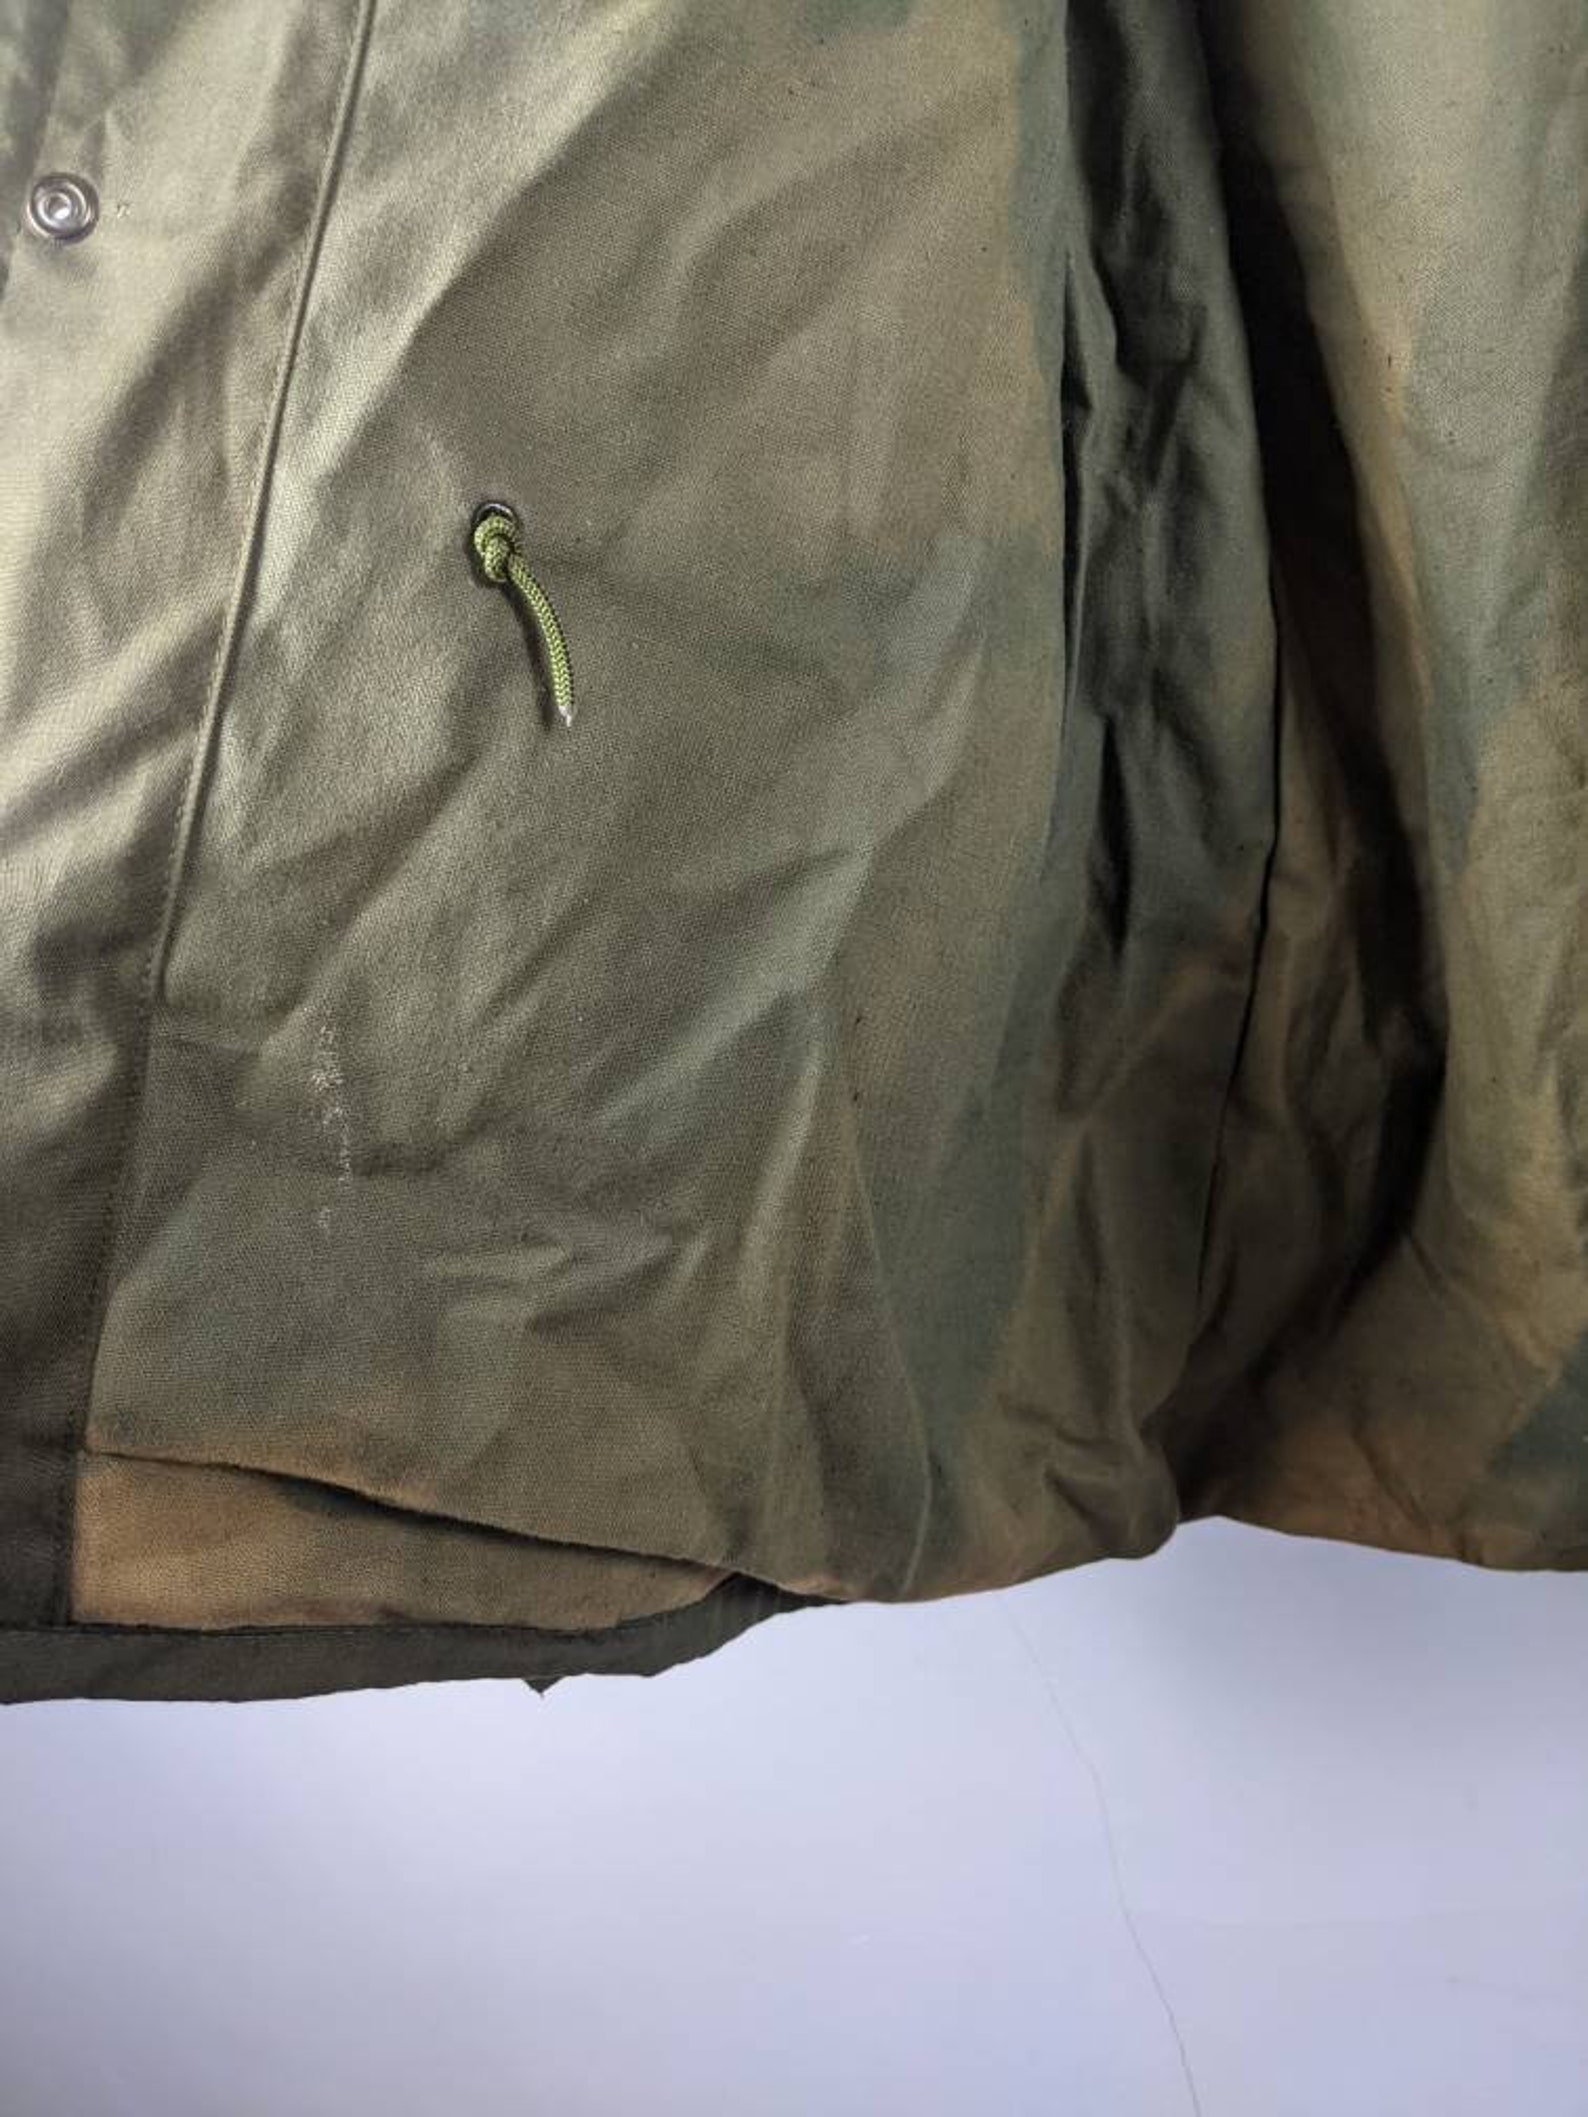 Vintage Military Jacket M65 Cold Weather Field Jacket | Etsy